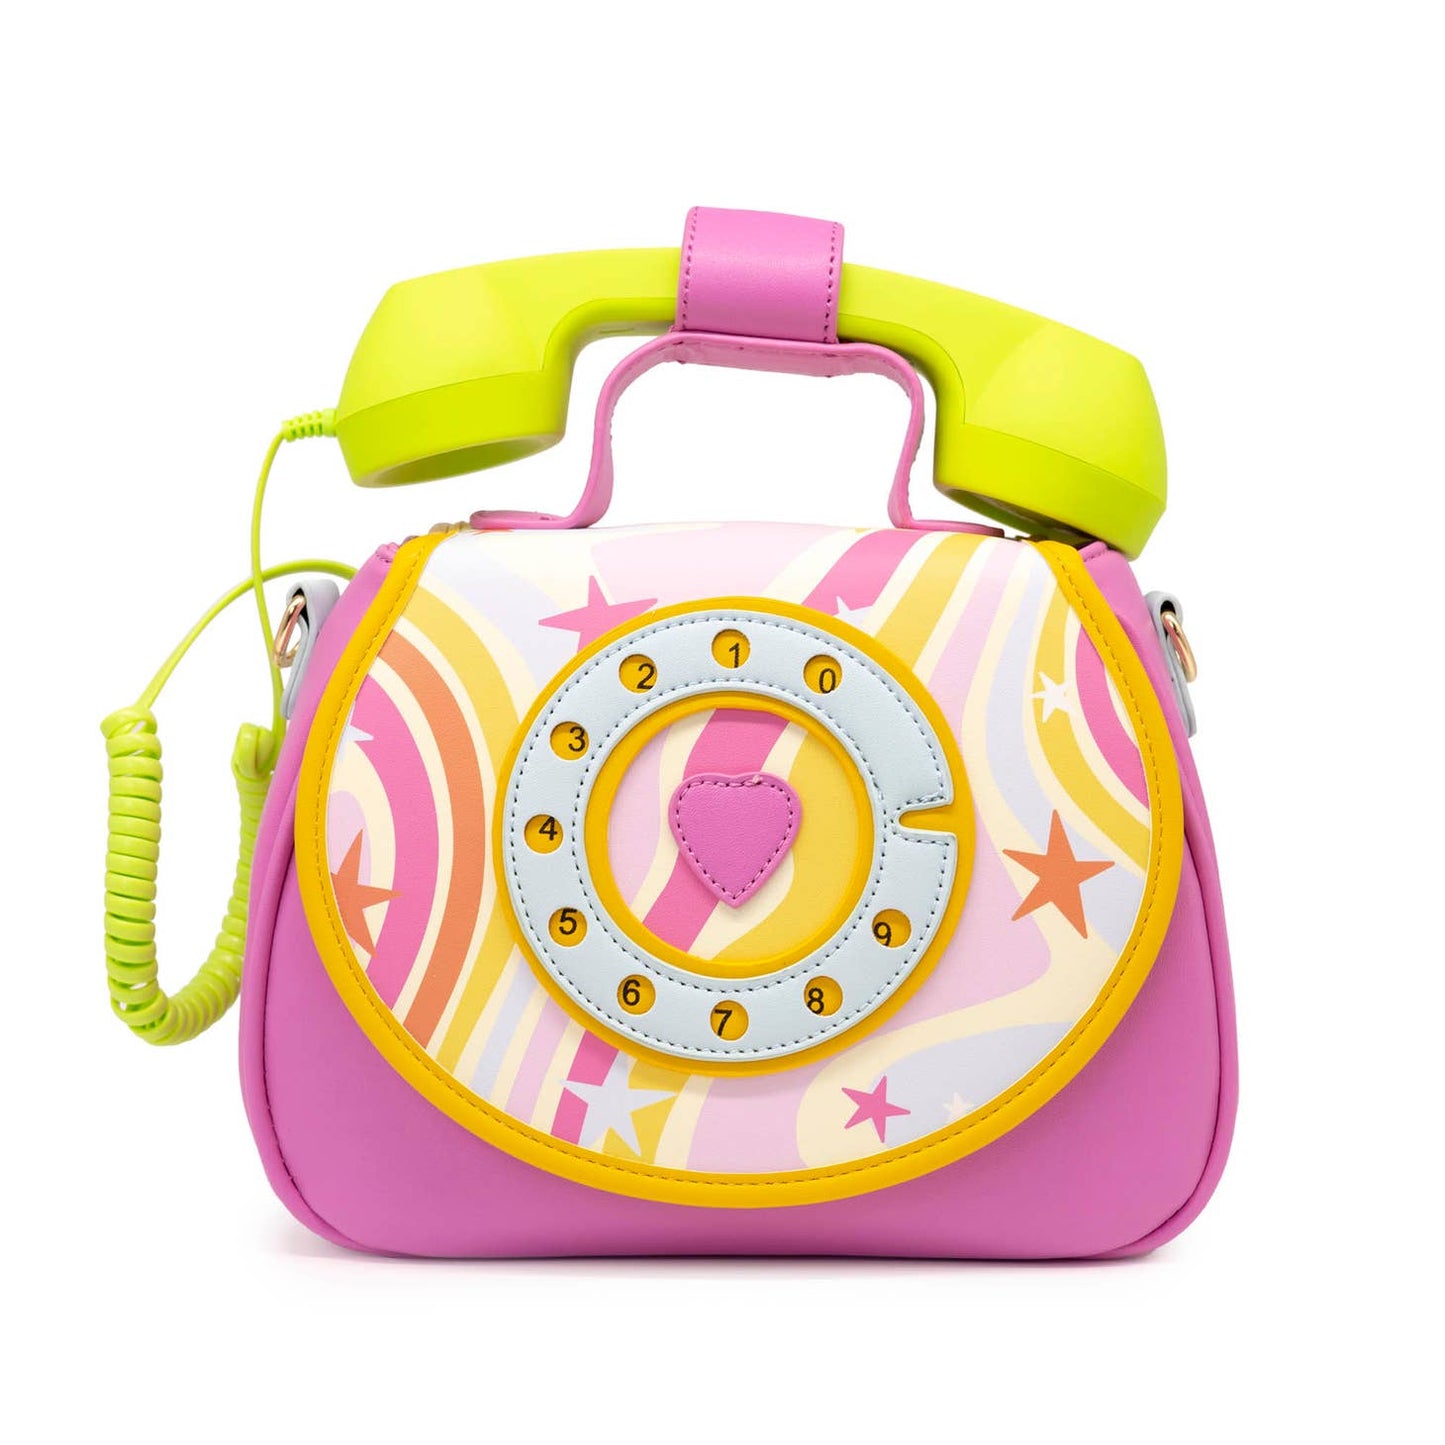 Bewaltz - Ring Ring Phone Convertible Handbag